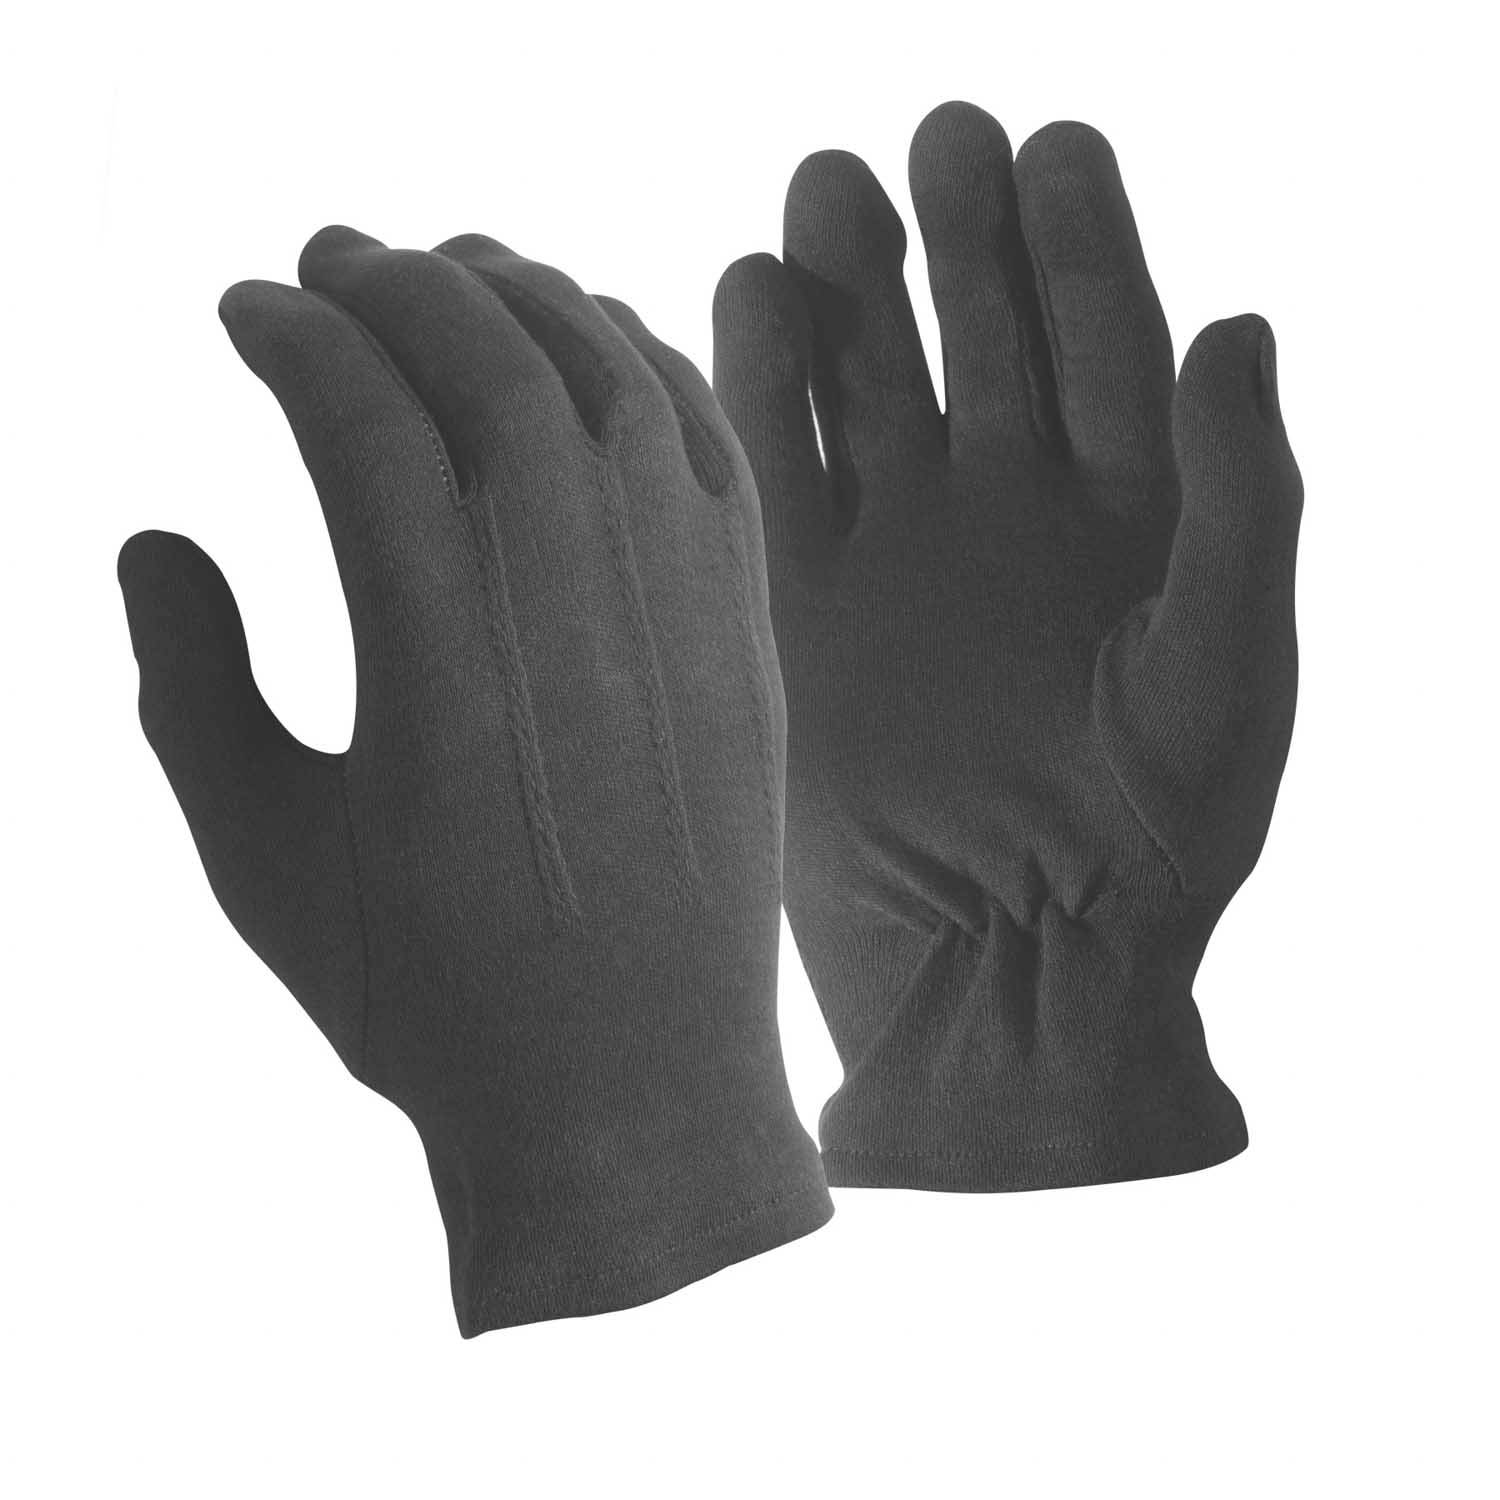 George Glove Co. Black Parade Gloves